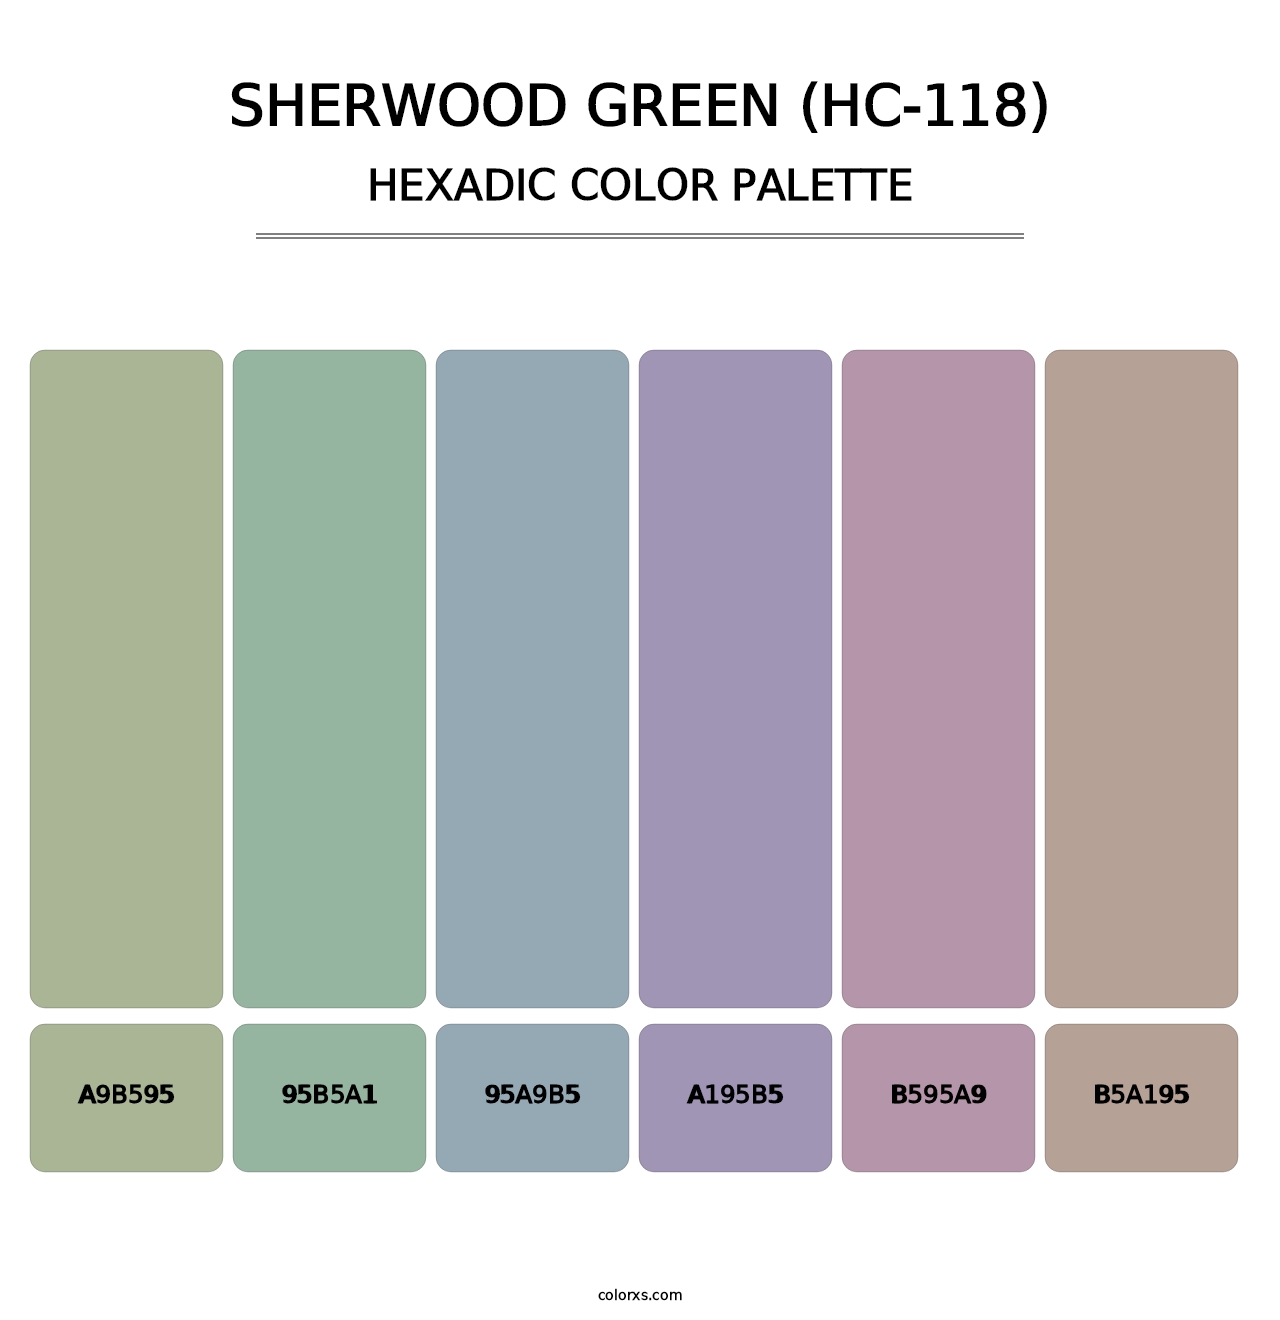 Sherwood Green (HC-118) - Hexadic Color Palette